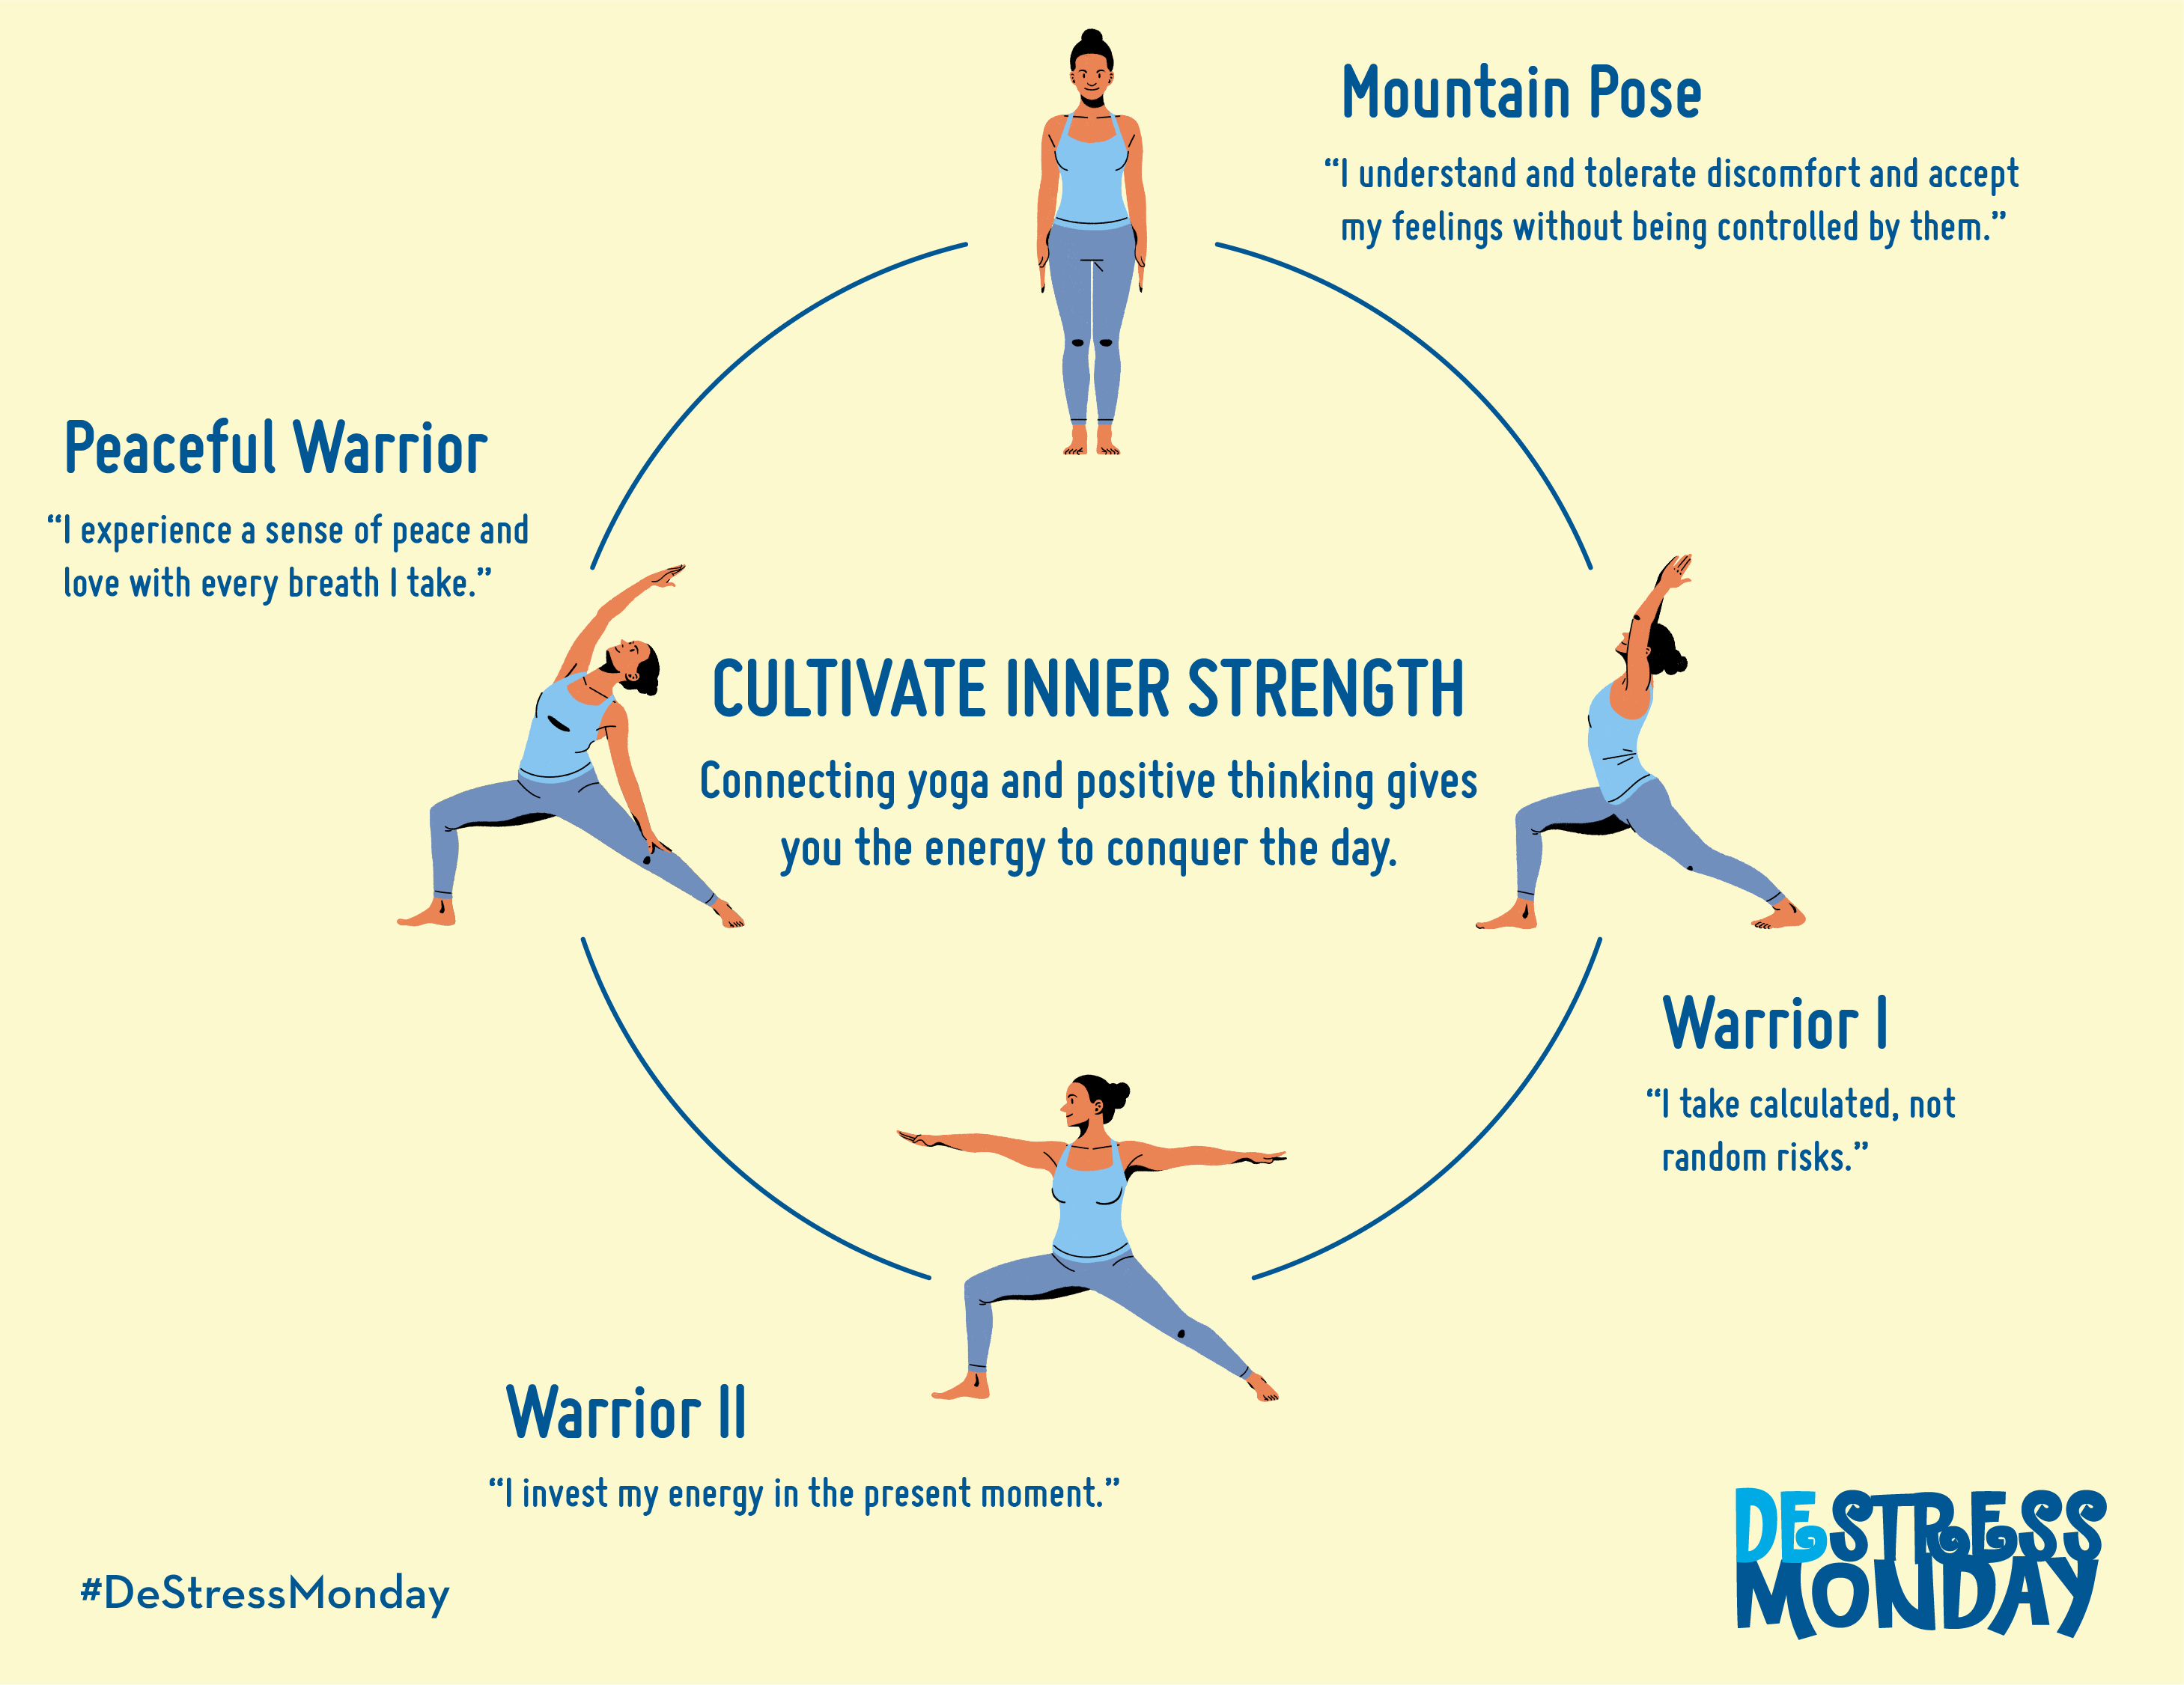 The Power of Yoga & Positivity